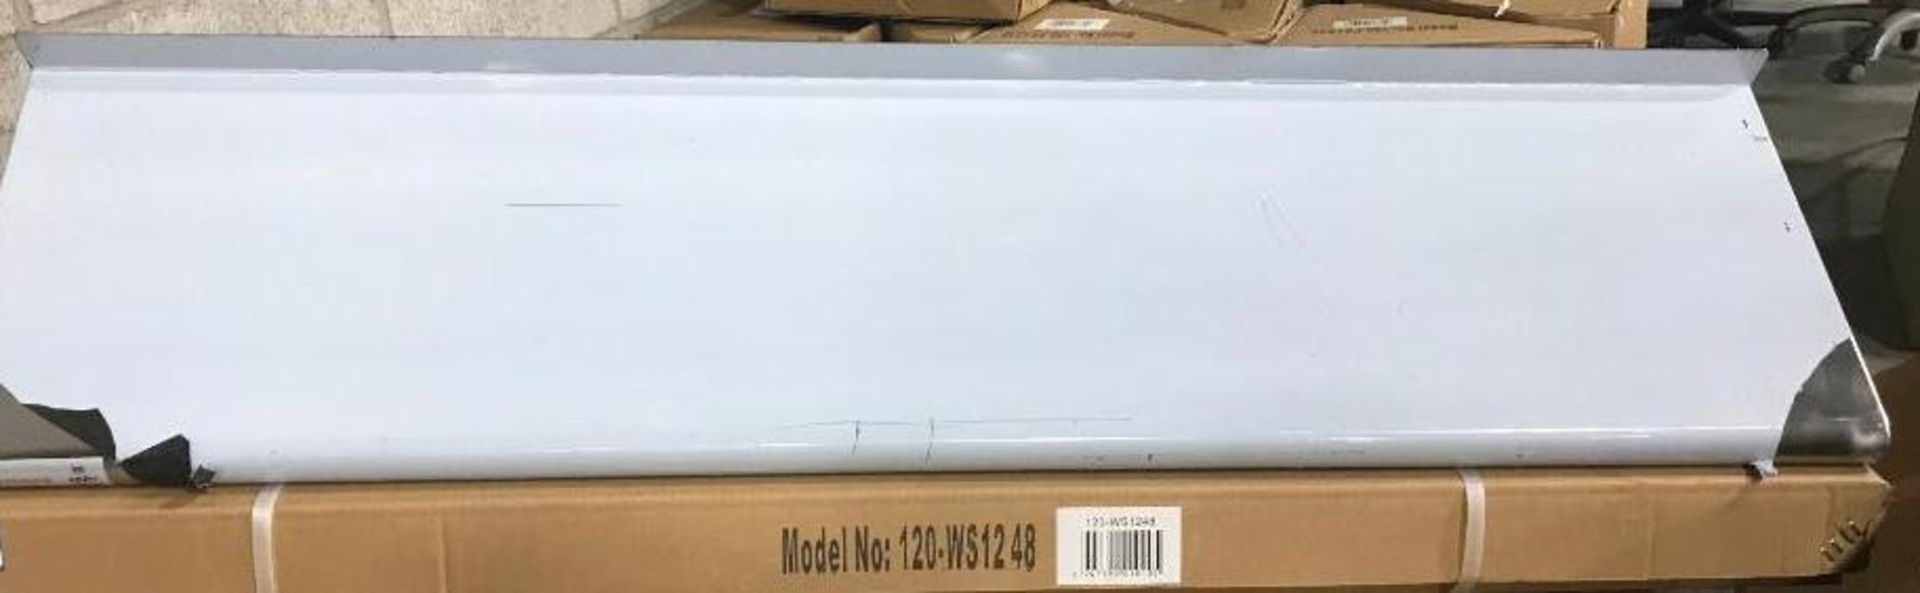 WALL MOUNT S/S SHELF 12"X48", 120-WS1248 - NEW IN BOX